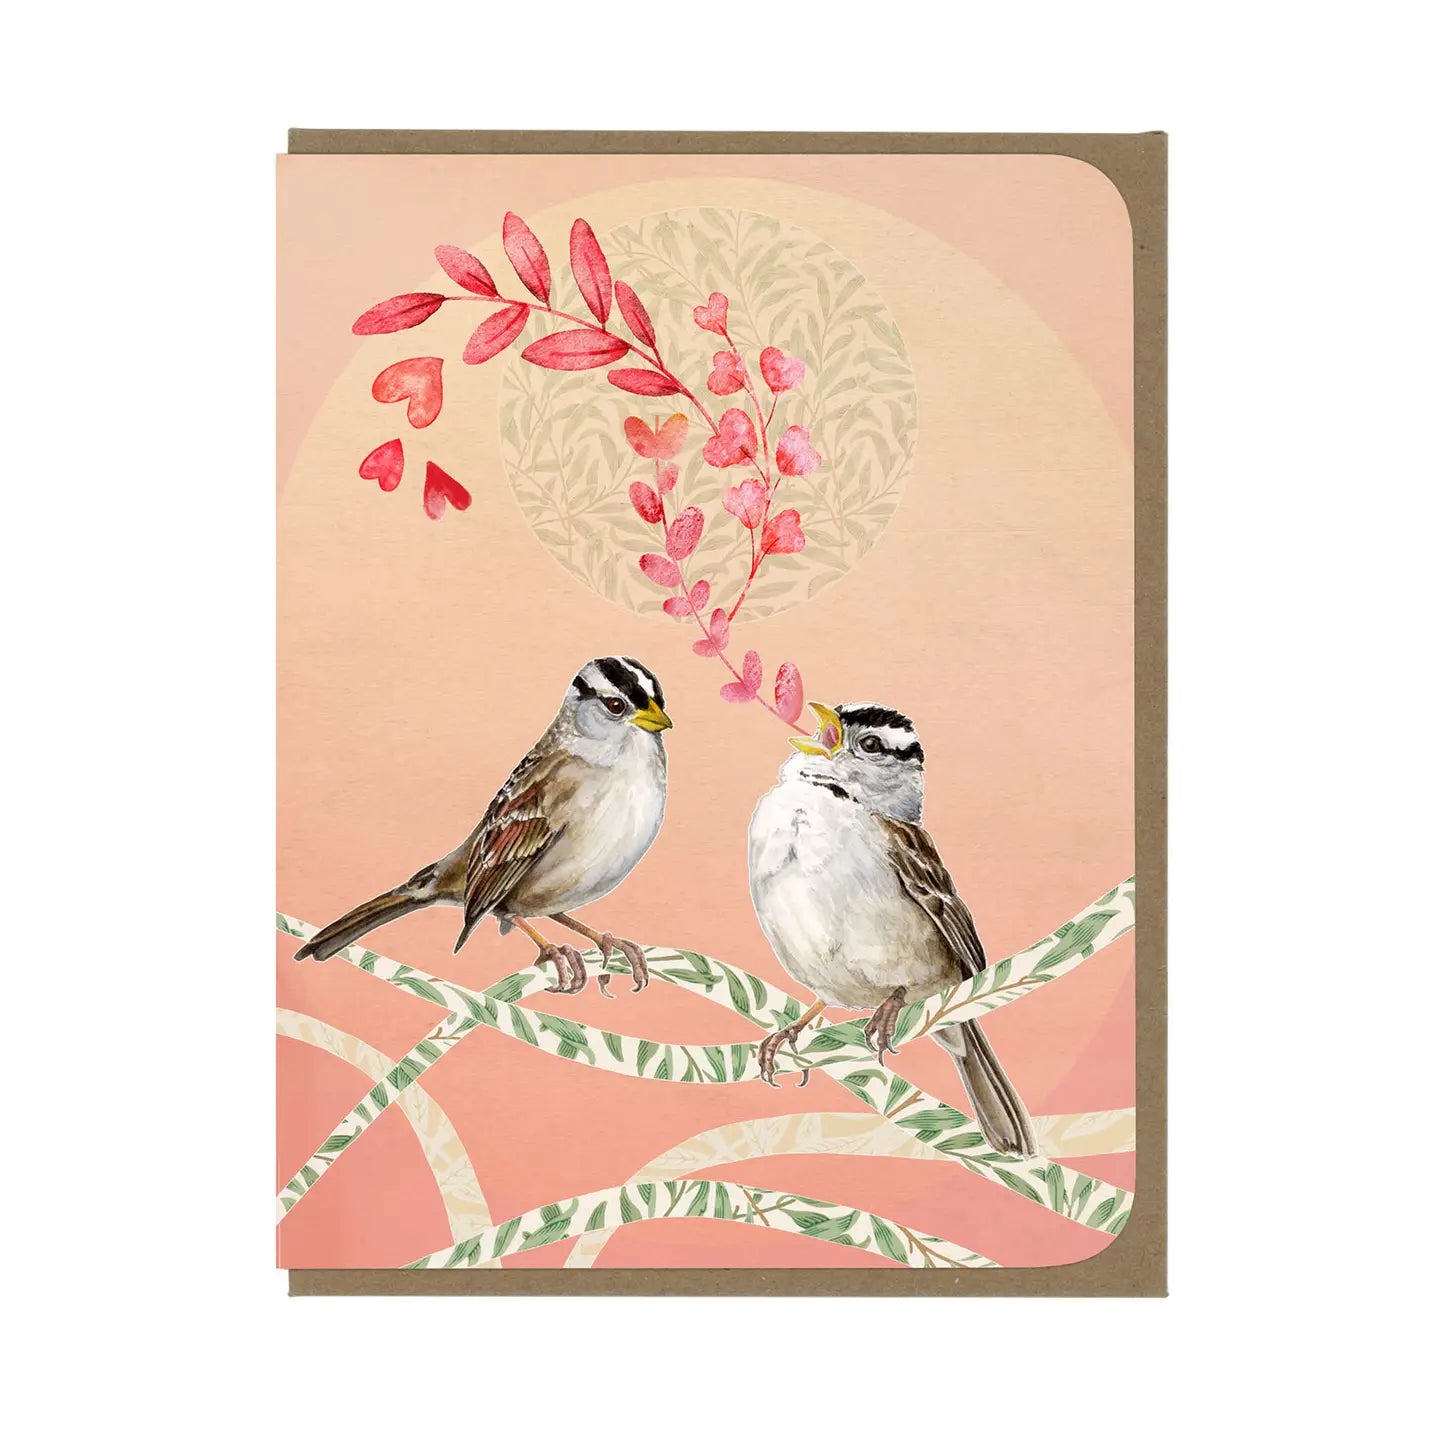 Love birds Greeting Card